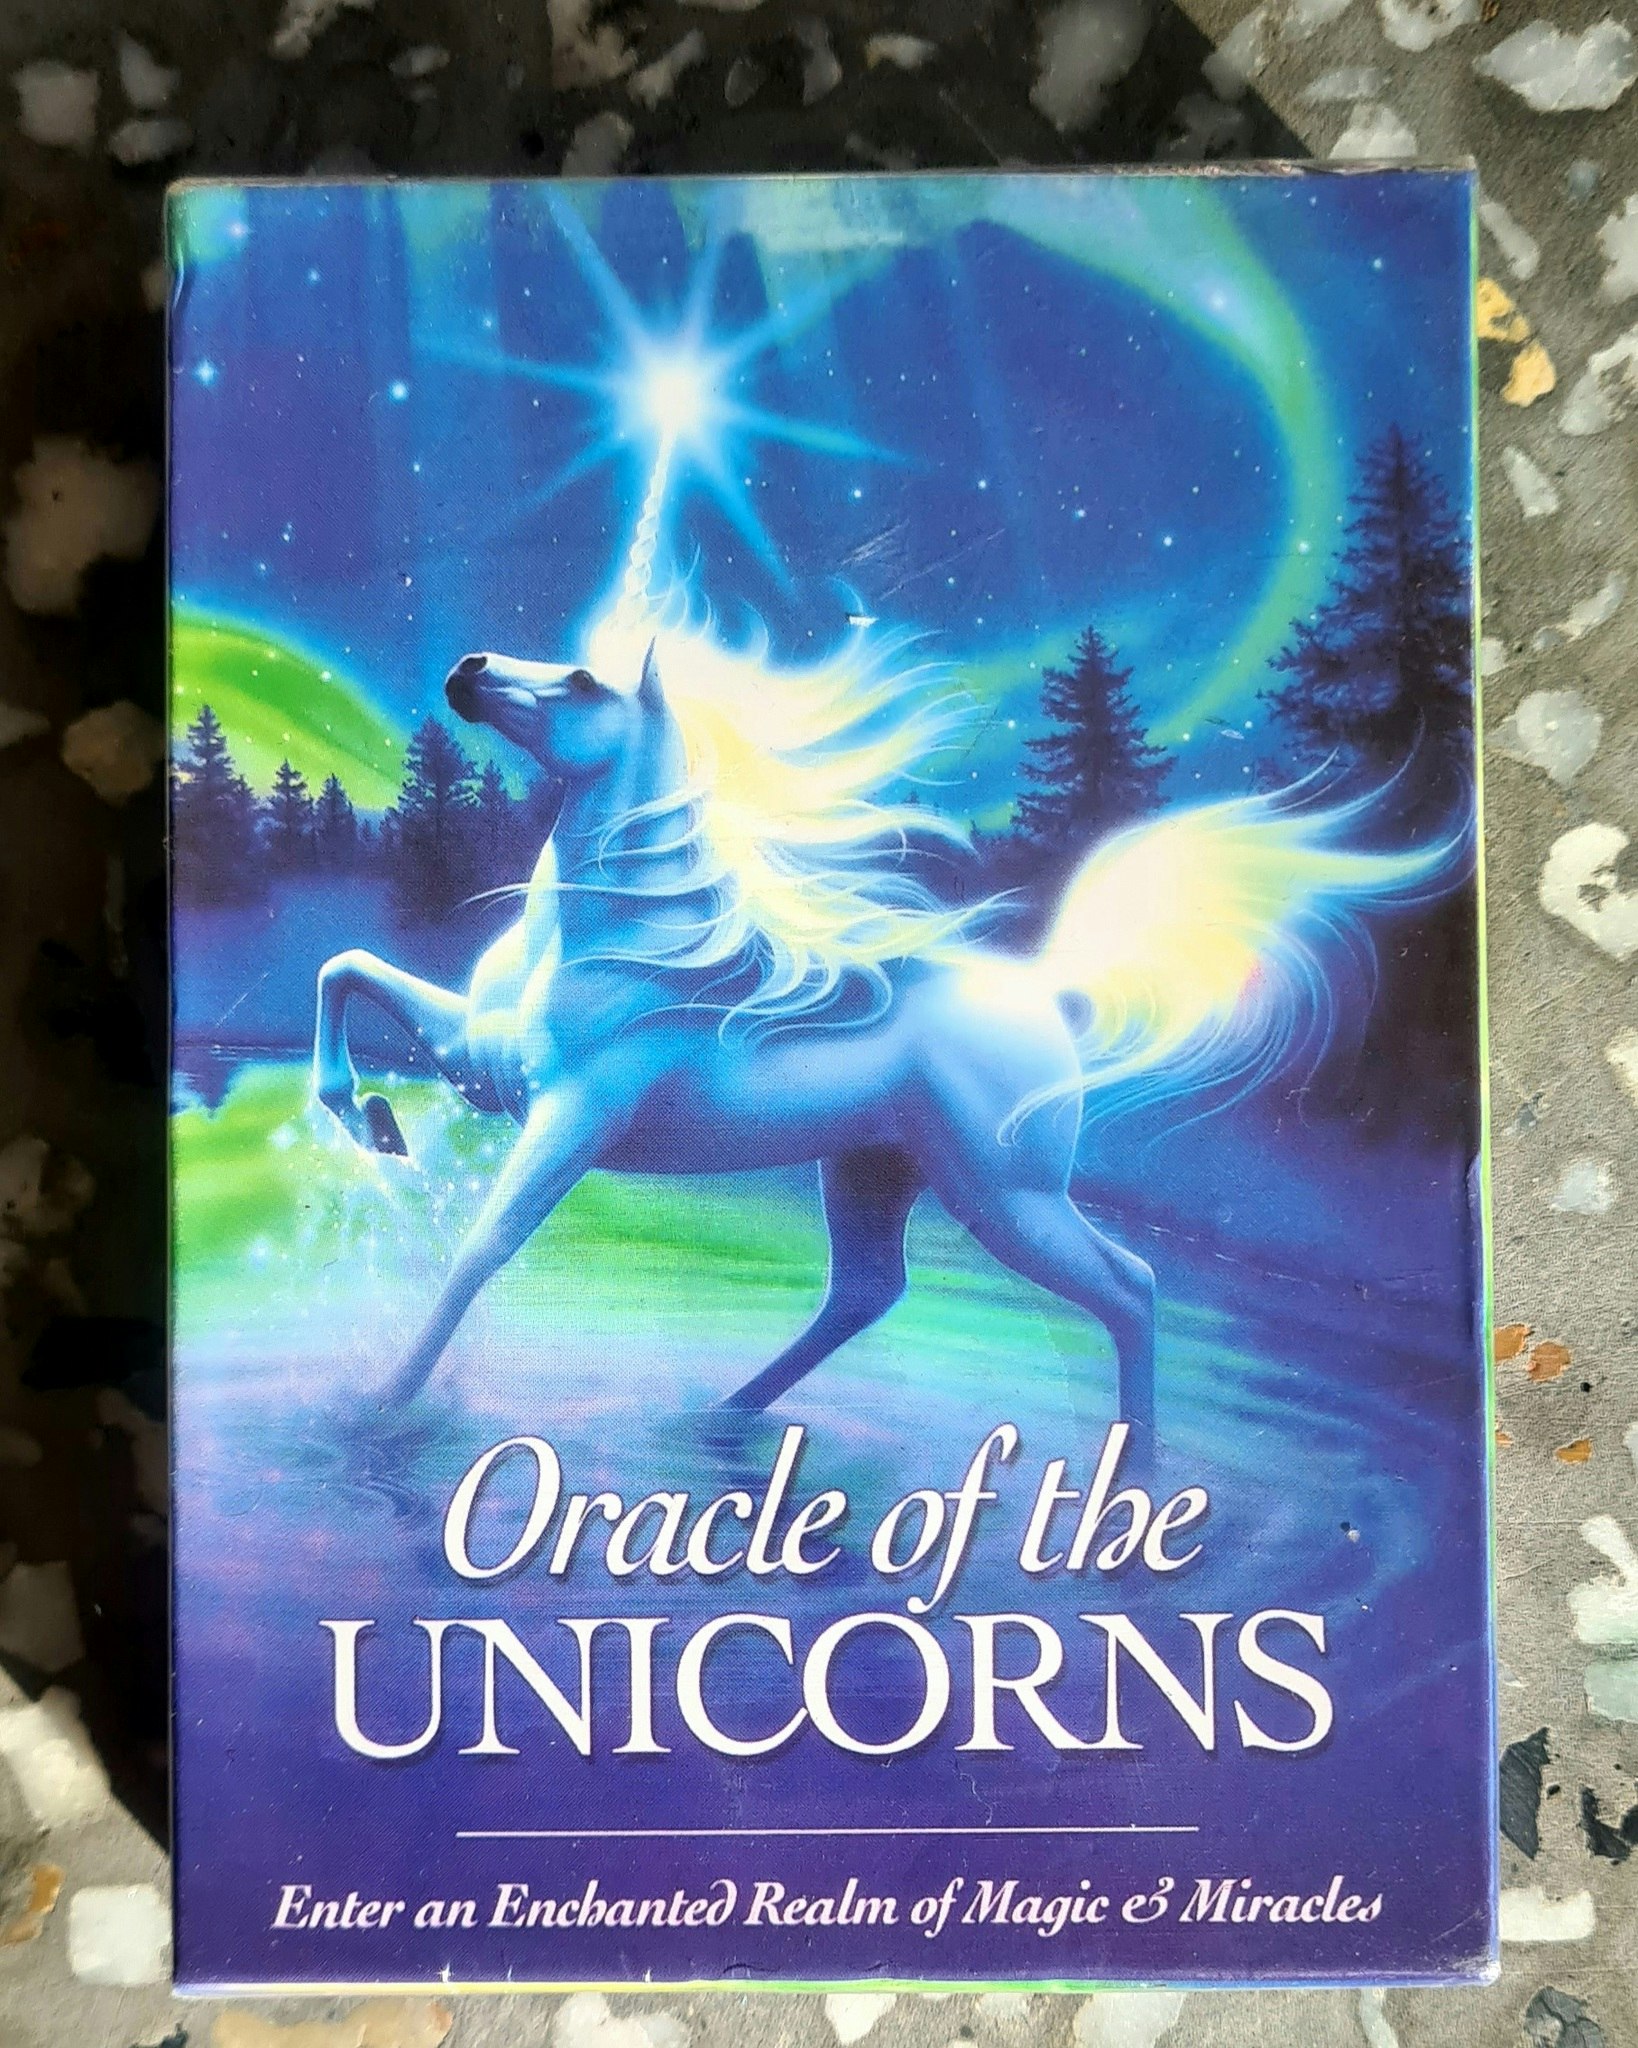 Oracle of the unicorns